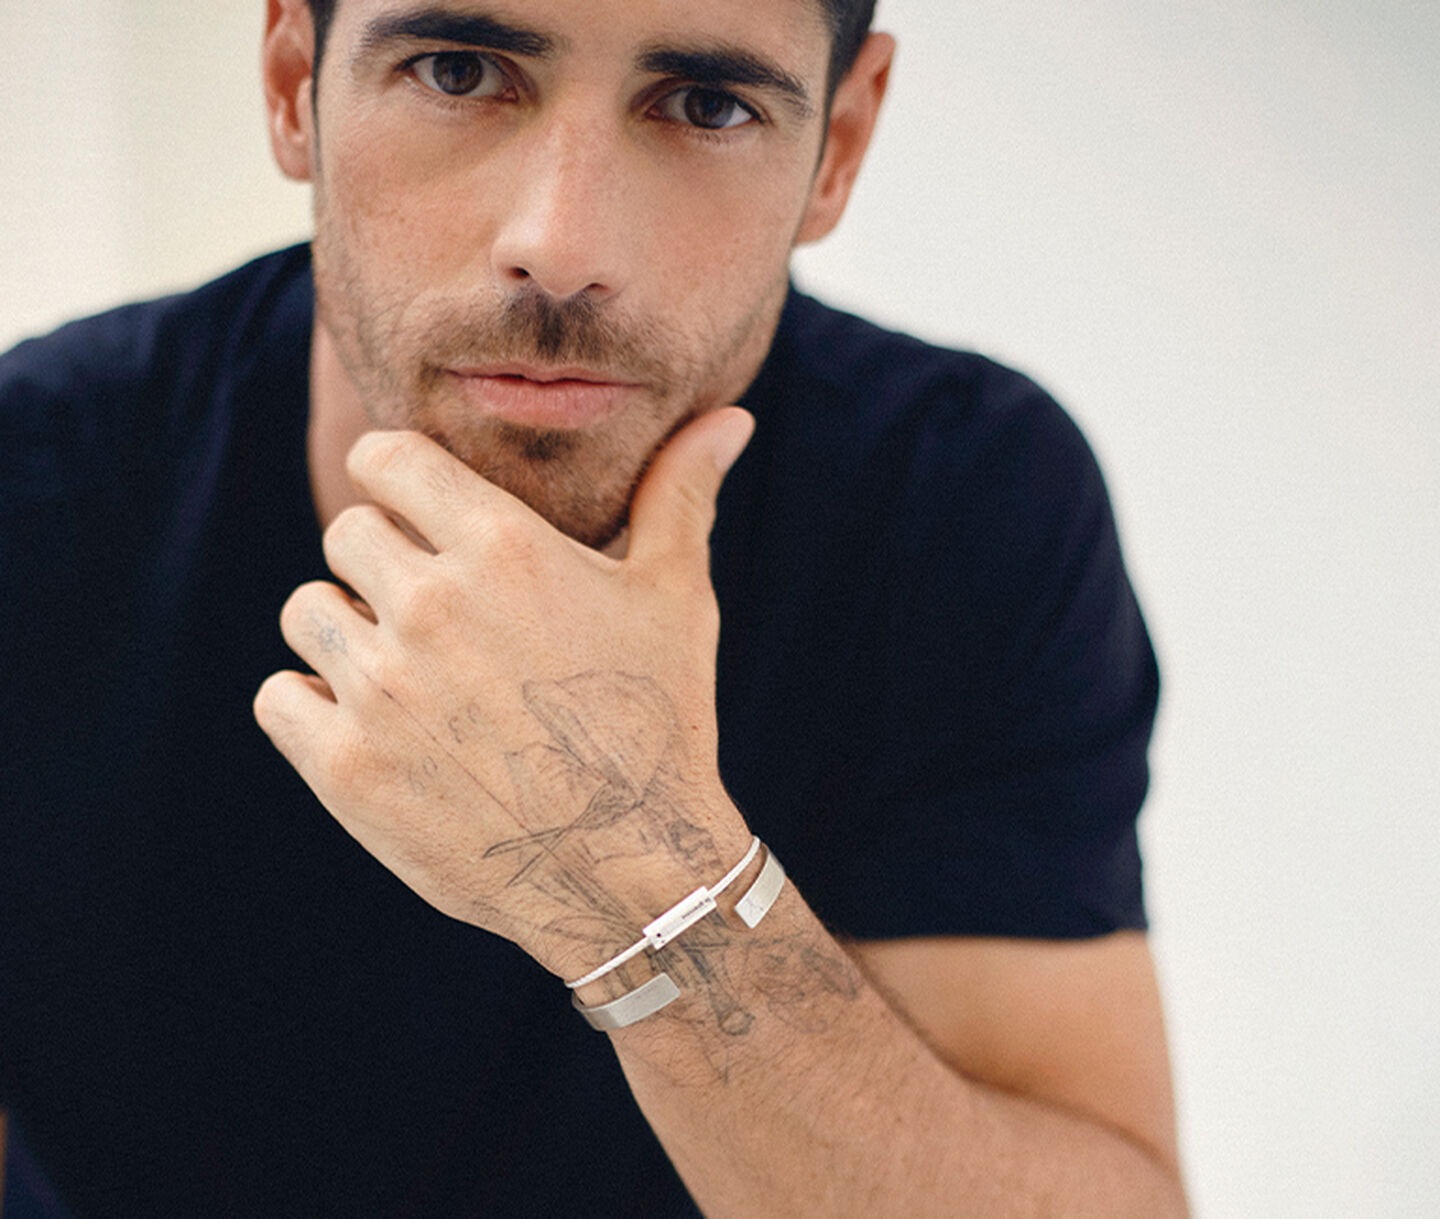  Erwan Le Louër wearing his le gramme designed bracelets.